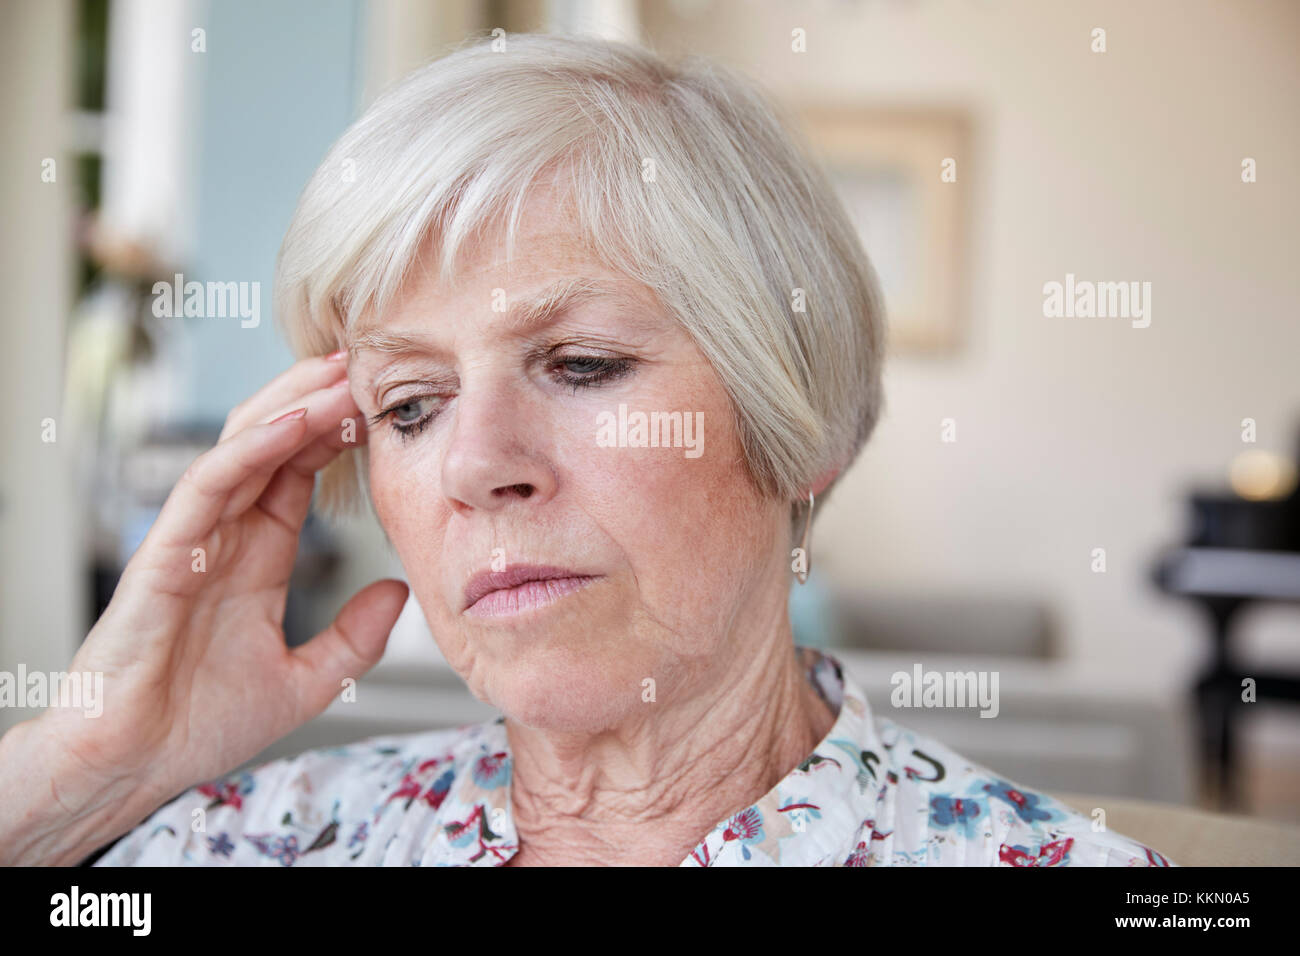 Contemplative senior woman at home, close up Stock Photo